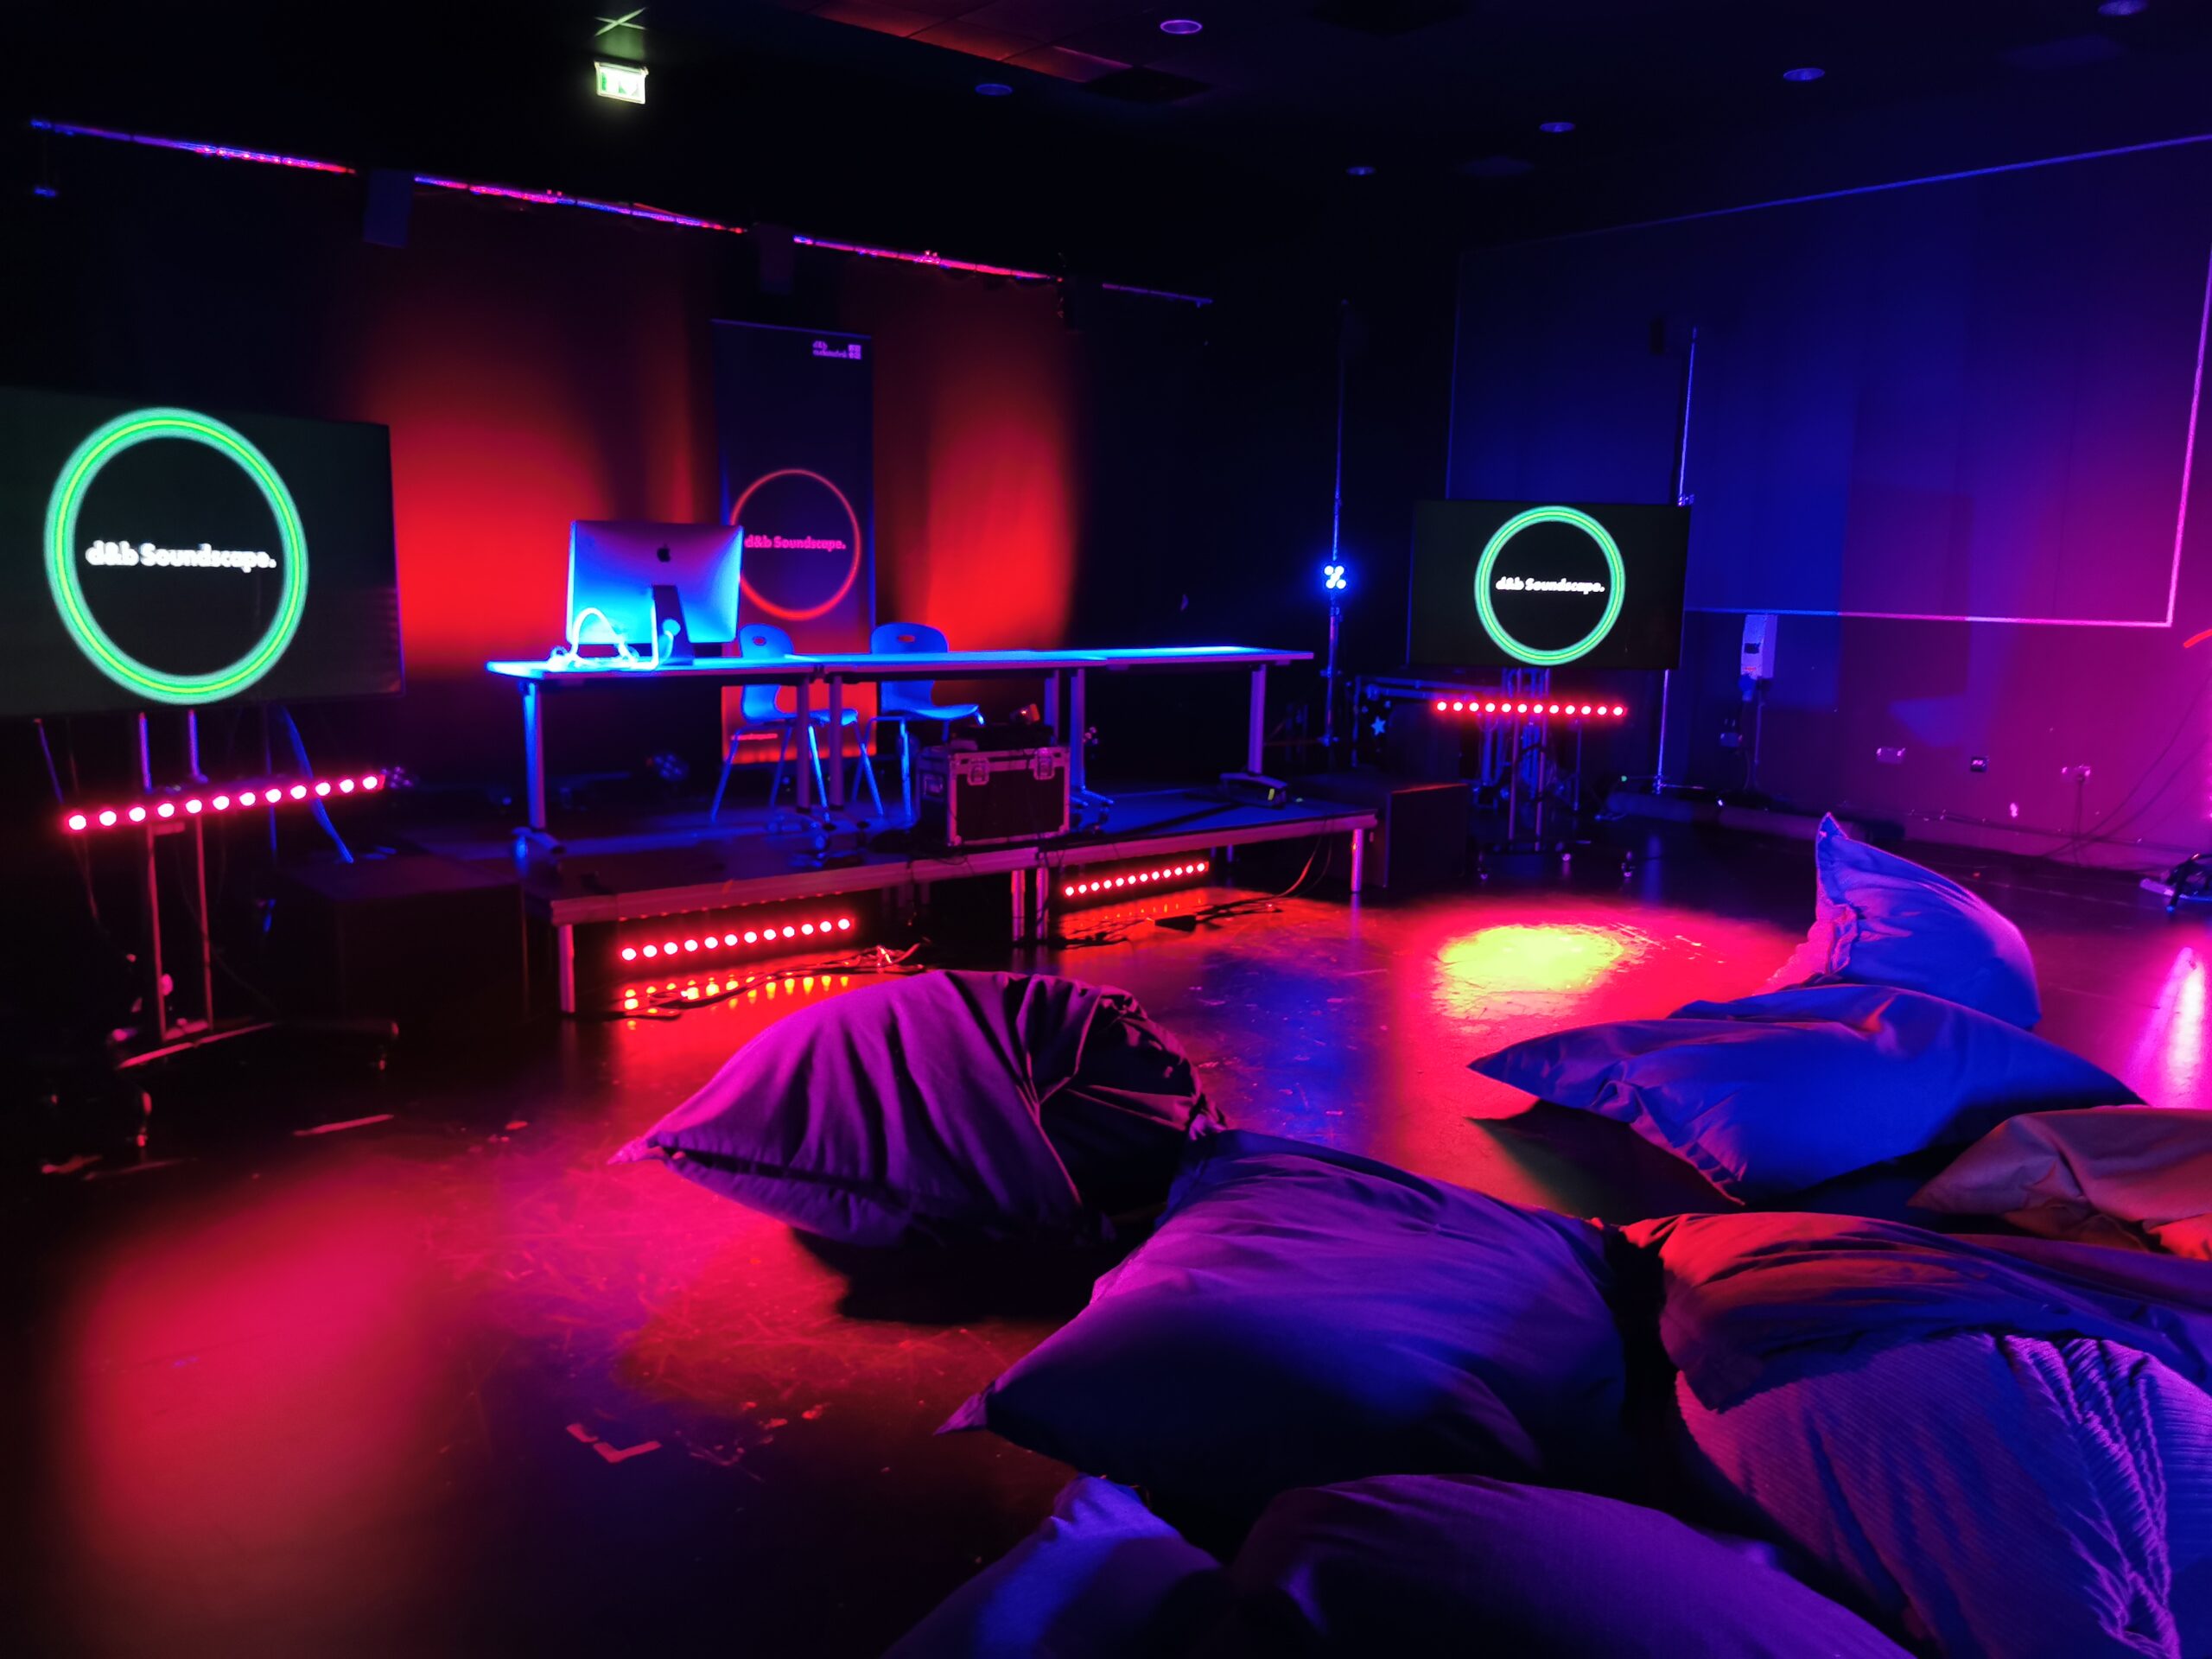 D&b soundscape presentation in dark room with led lights